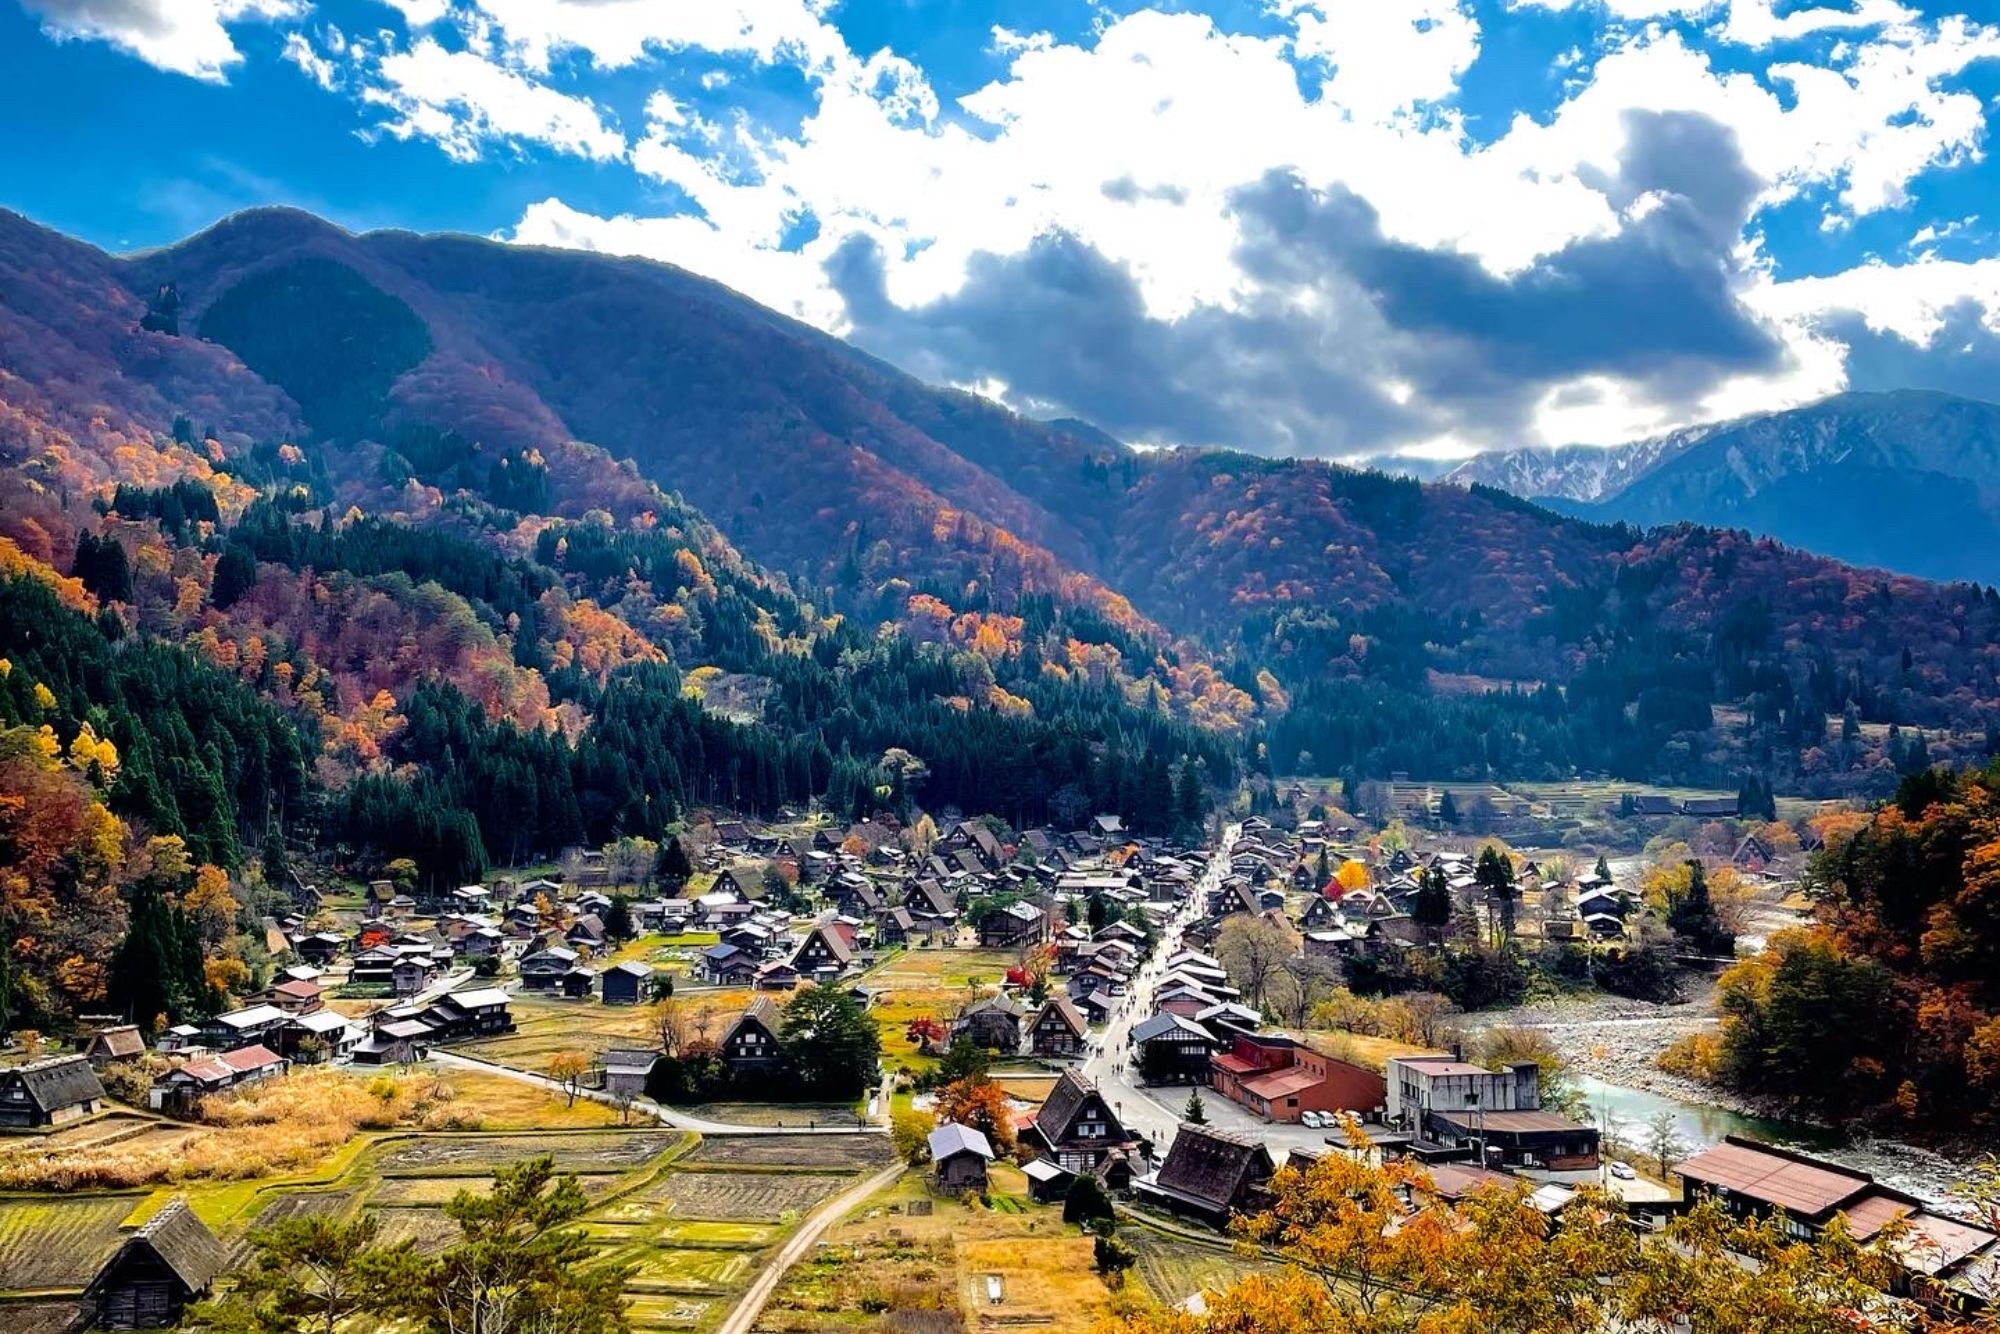 Best Places to Stay in Takayama, Japan: Hotel, Ryokan, or Machiya?